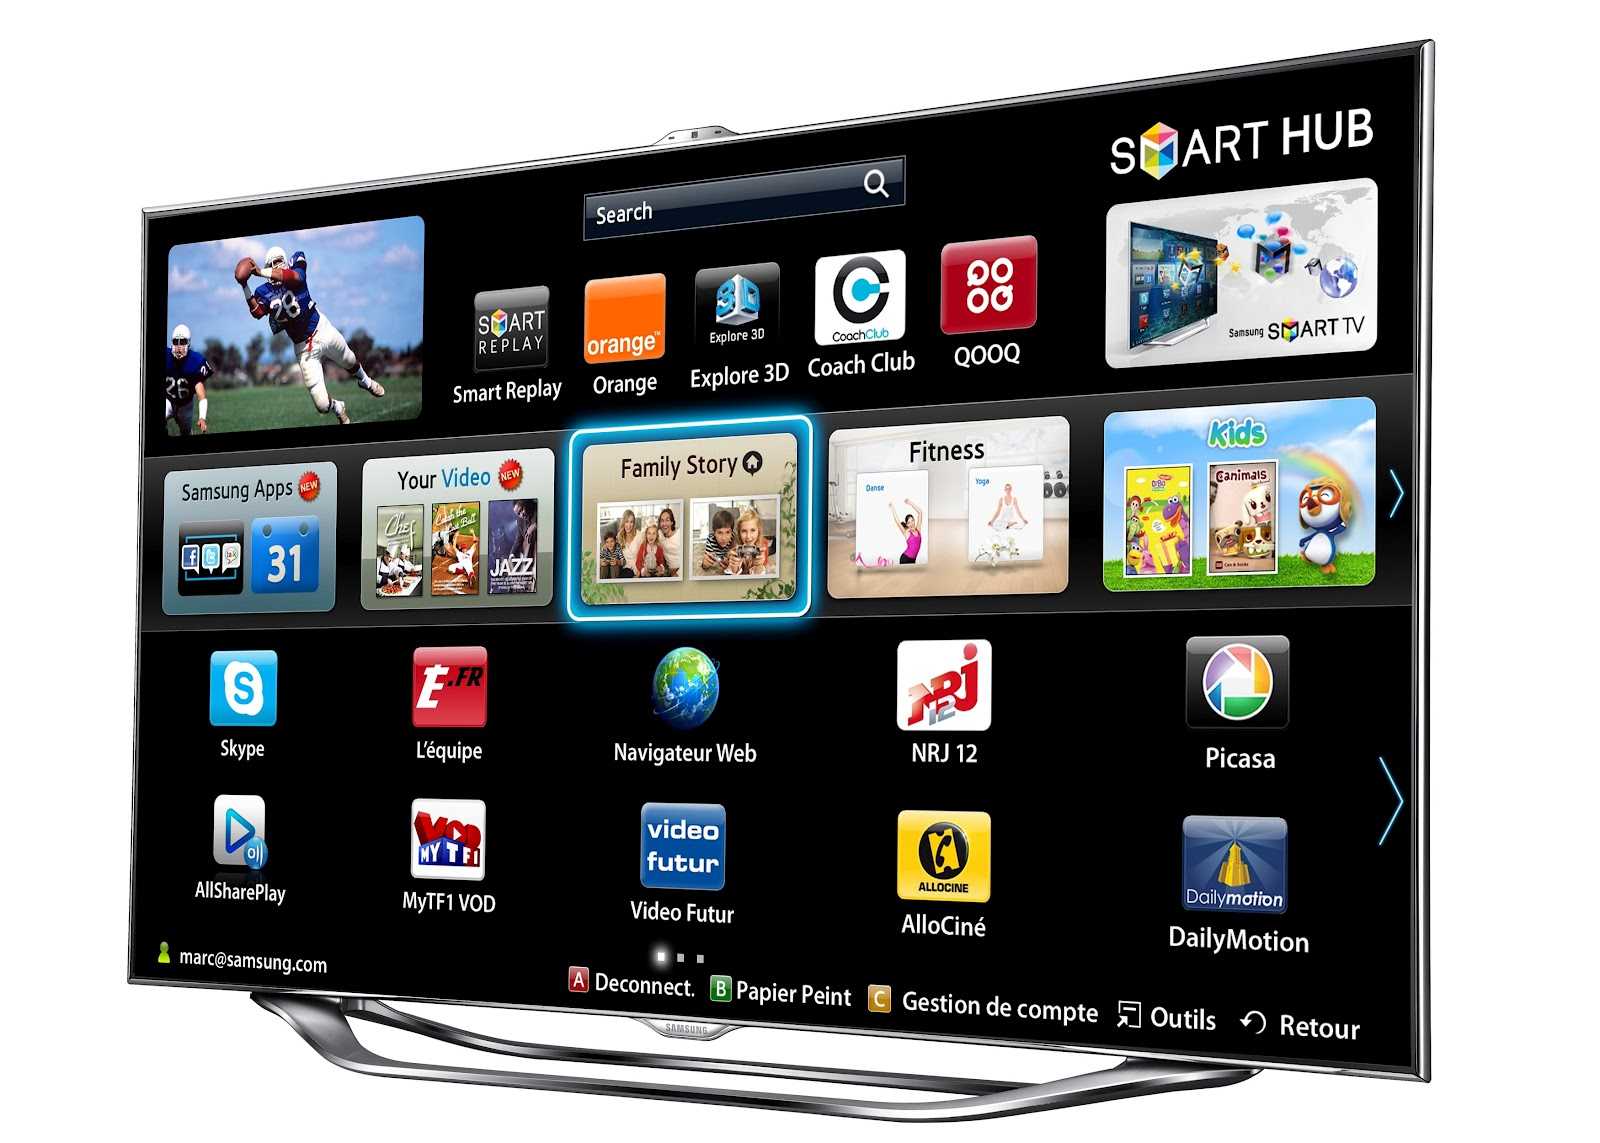 Телевизор samsung смарт купить. Samsung Smart TV. Смарт хаб смарт ТВ самсунг. Samsung Smart TV ue46es8000. Телевизор самсунг смарт ТВ 42.